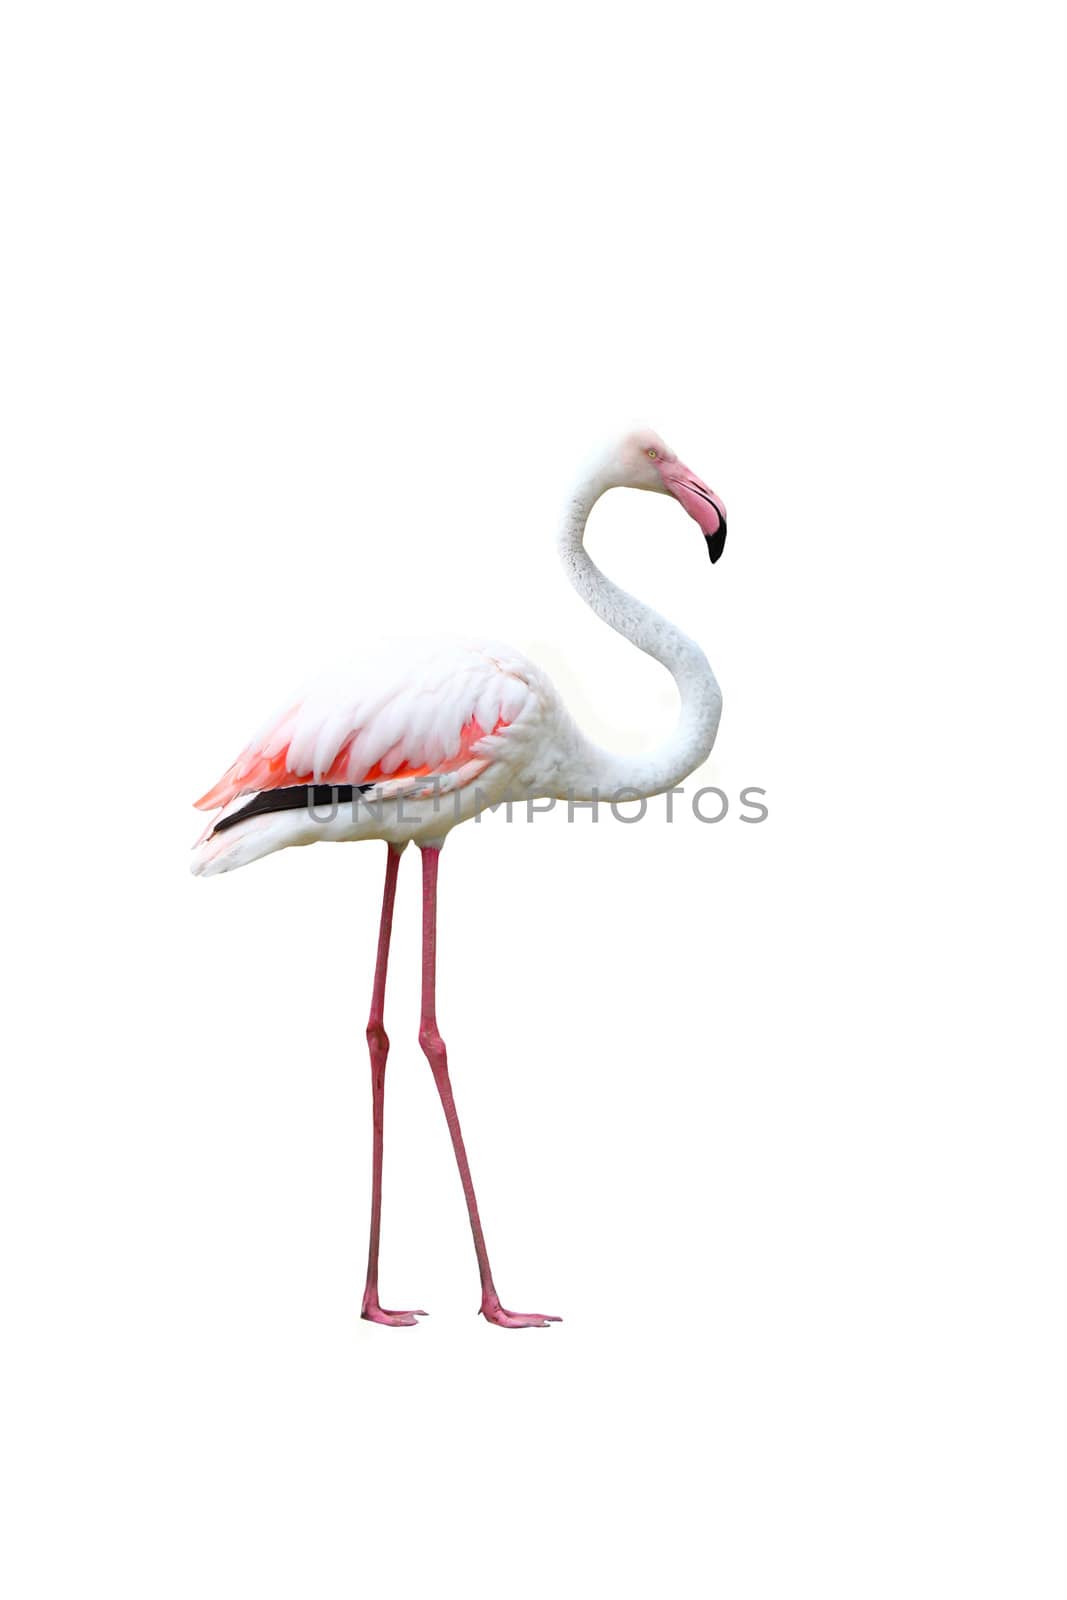 Bird flamingo walking on a white background by bajita111122